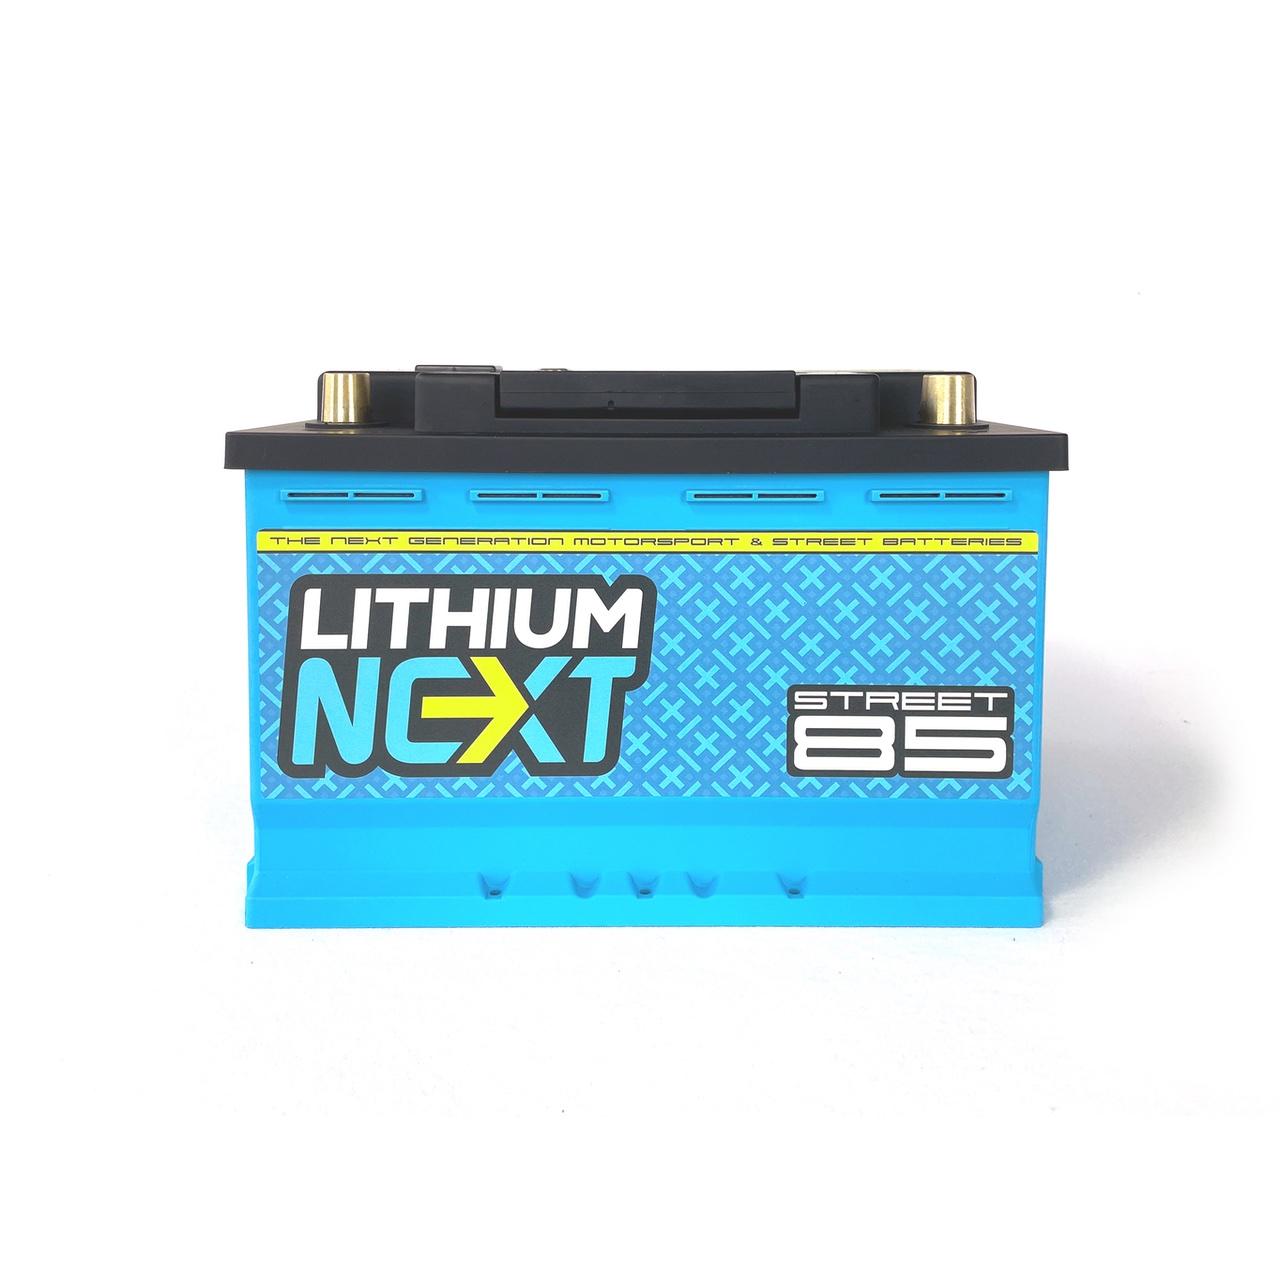 Batterie de démarrage LithiumNEXT STREET85 Pbeq 85 Ah » Burkhart Engineering